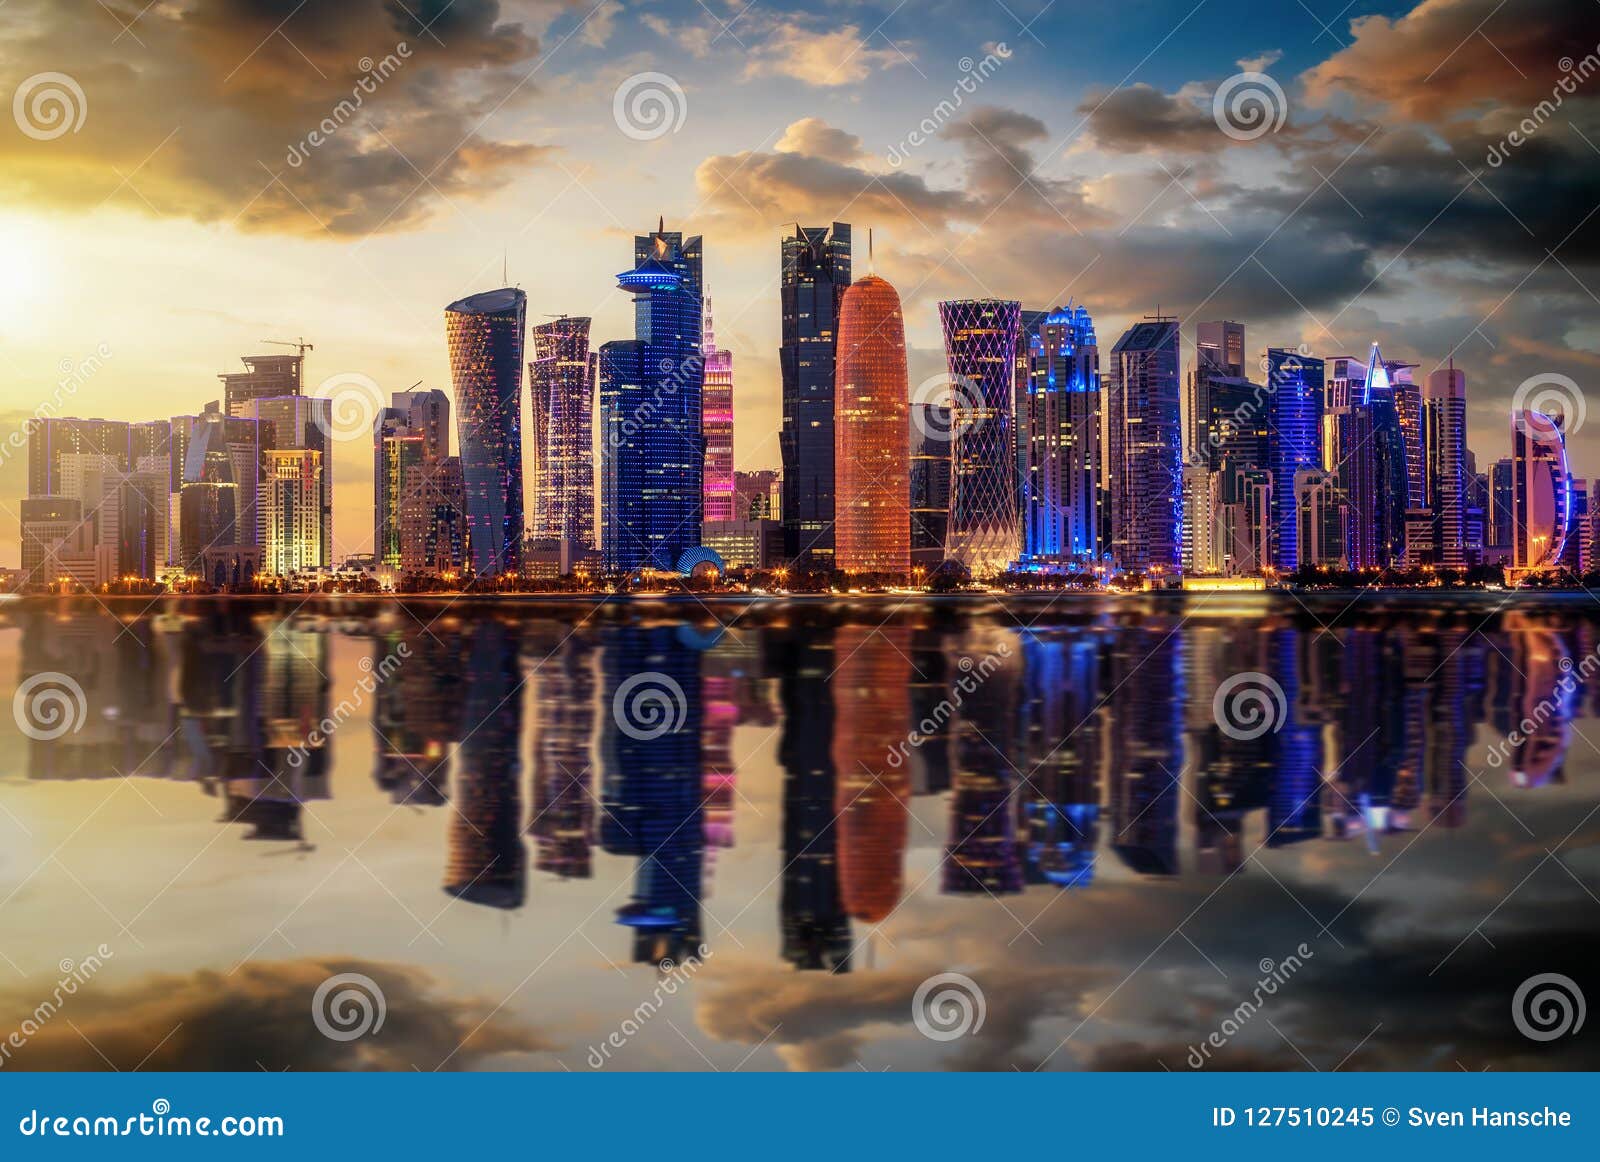 the illuminated, urban skyline of doha, qatar